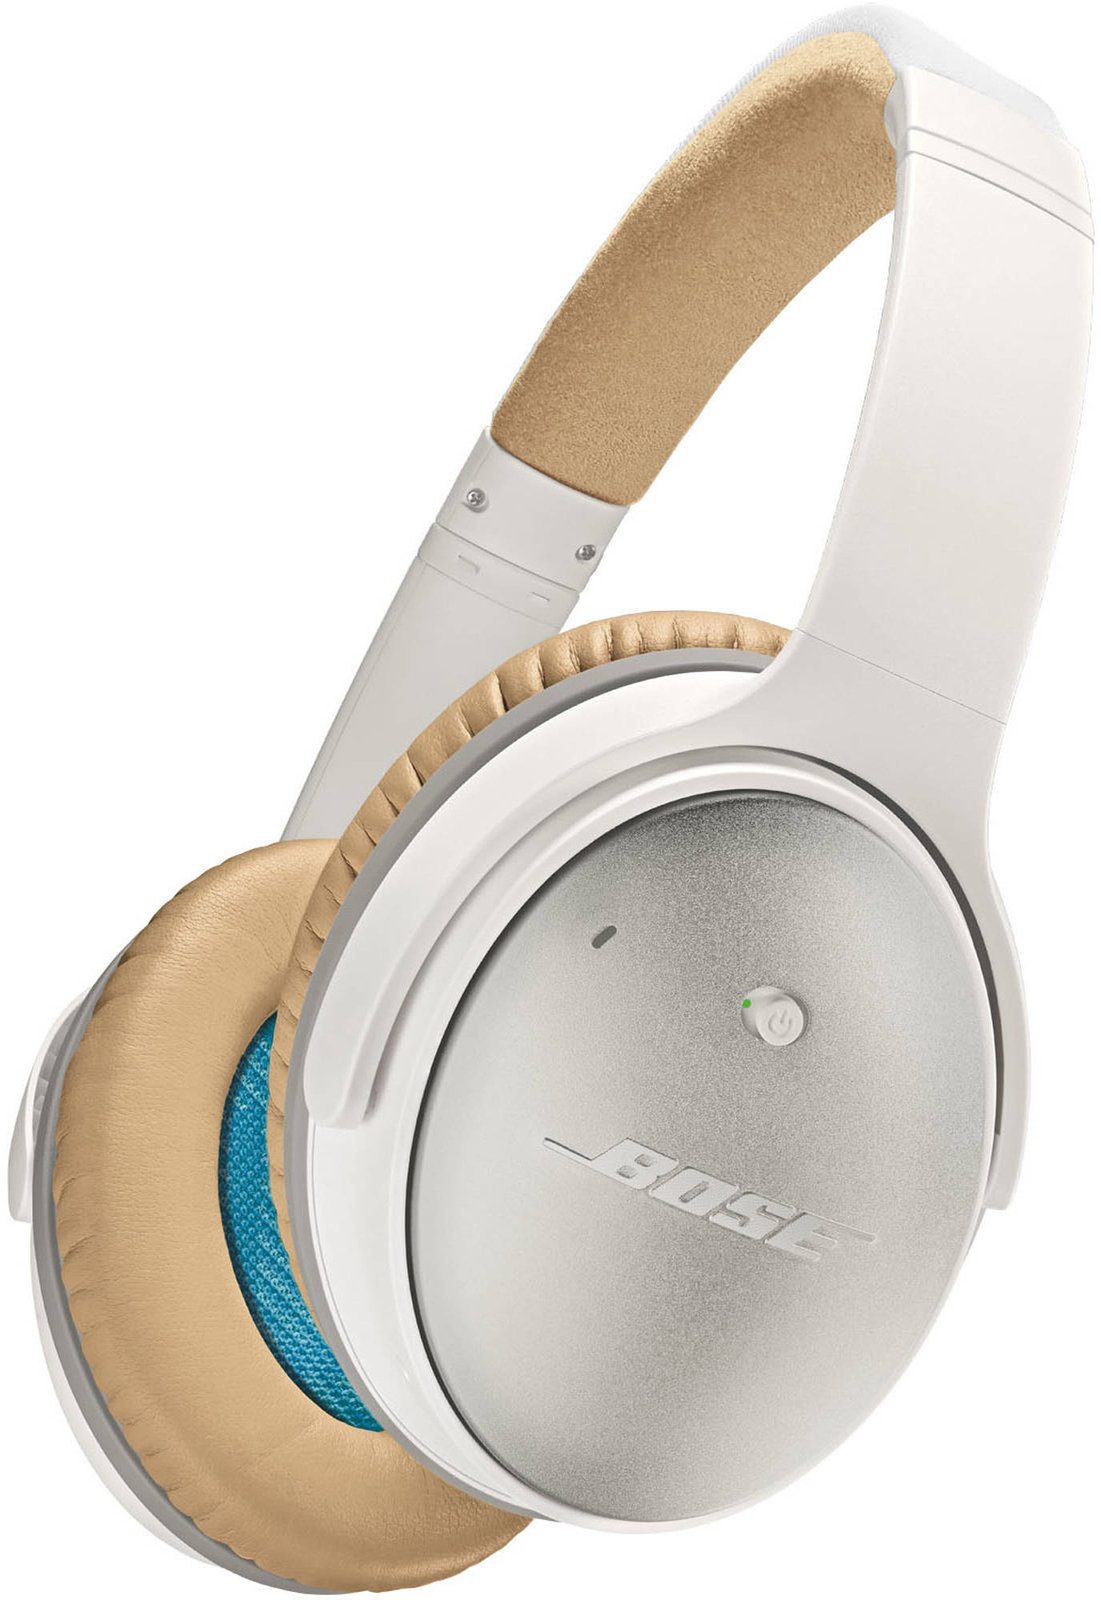 Hör-Sprech-Kombination Bose QuietComfort 25 Android White